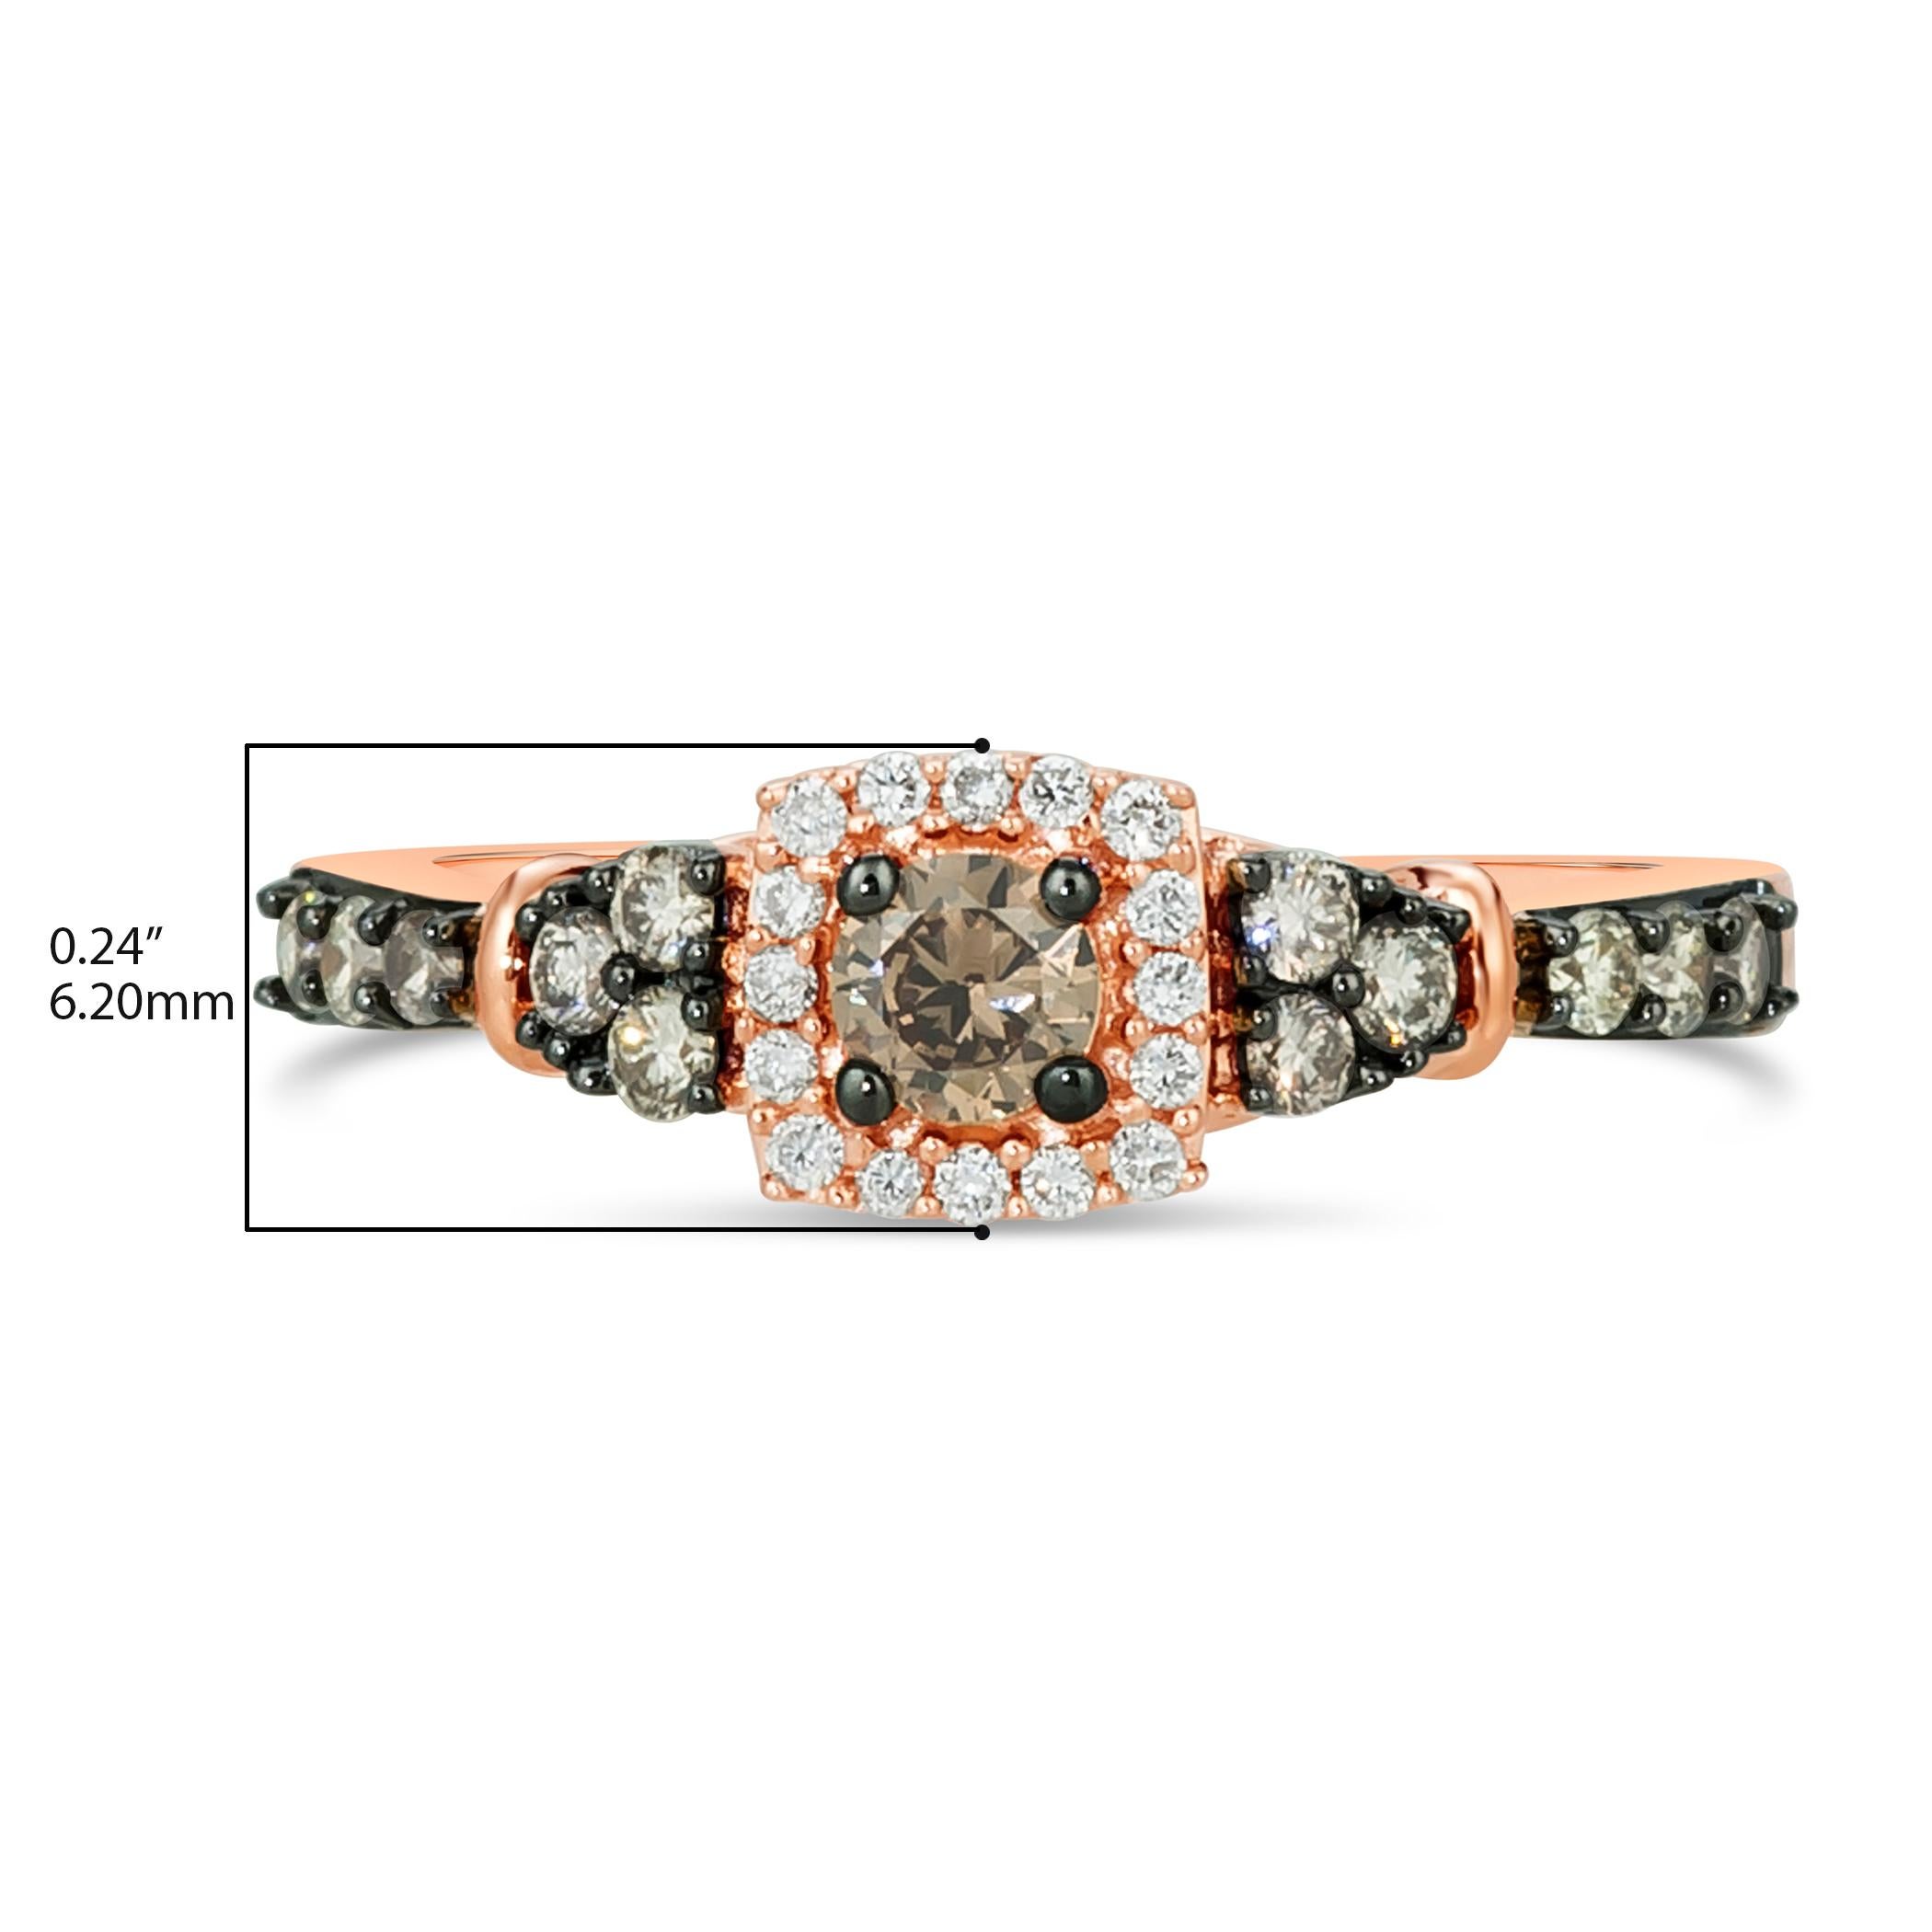 LeVian 14K Rose Gold White/Chocolate Diamond Halo Fashion Ring - Size 6.5